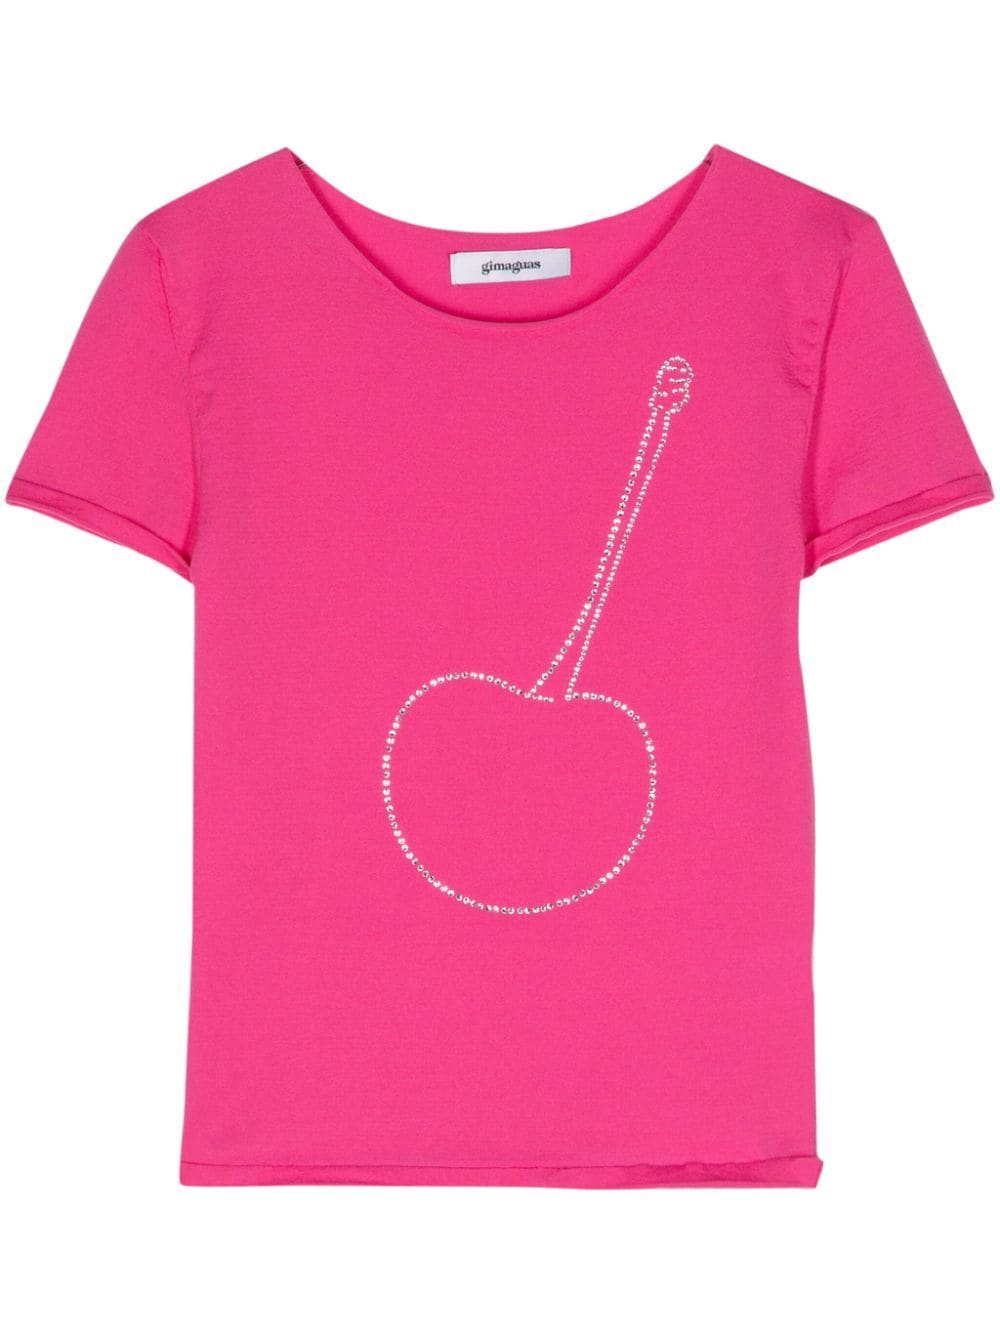 Gimaguas Cherry Shiny Rhinestone-embellished T-shirt In Pink